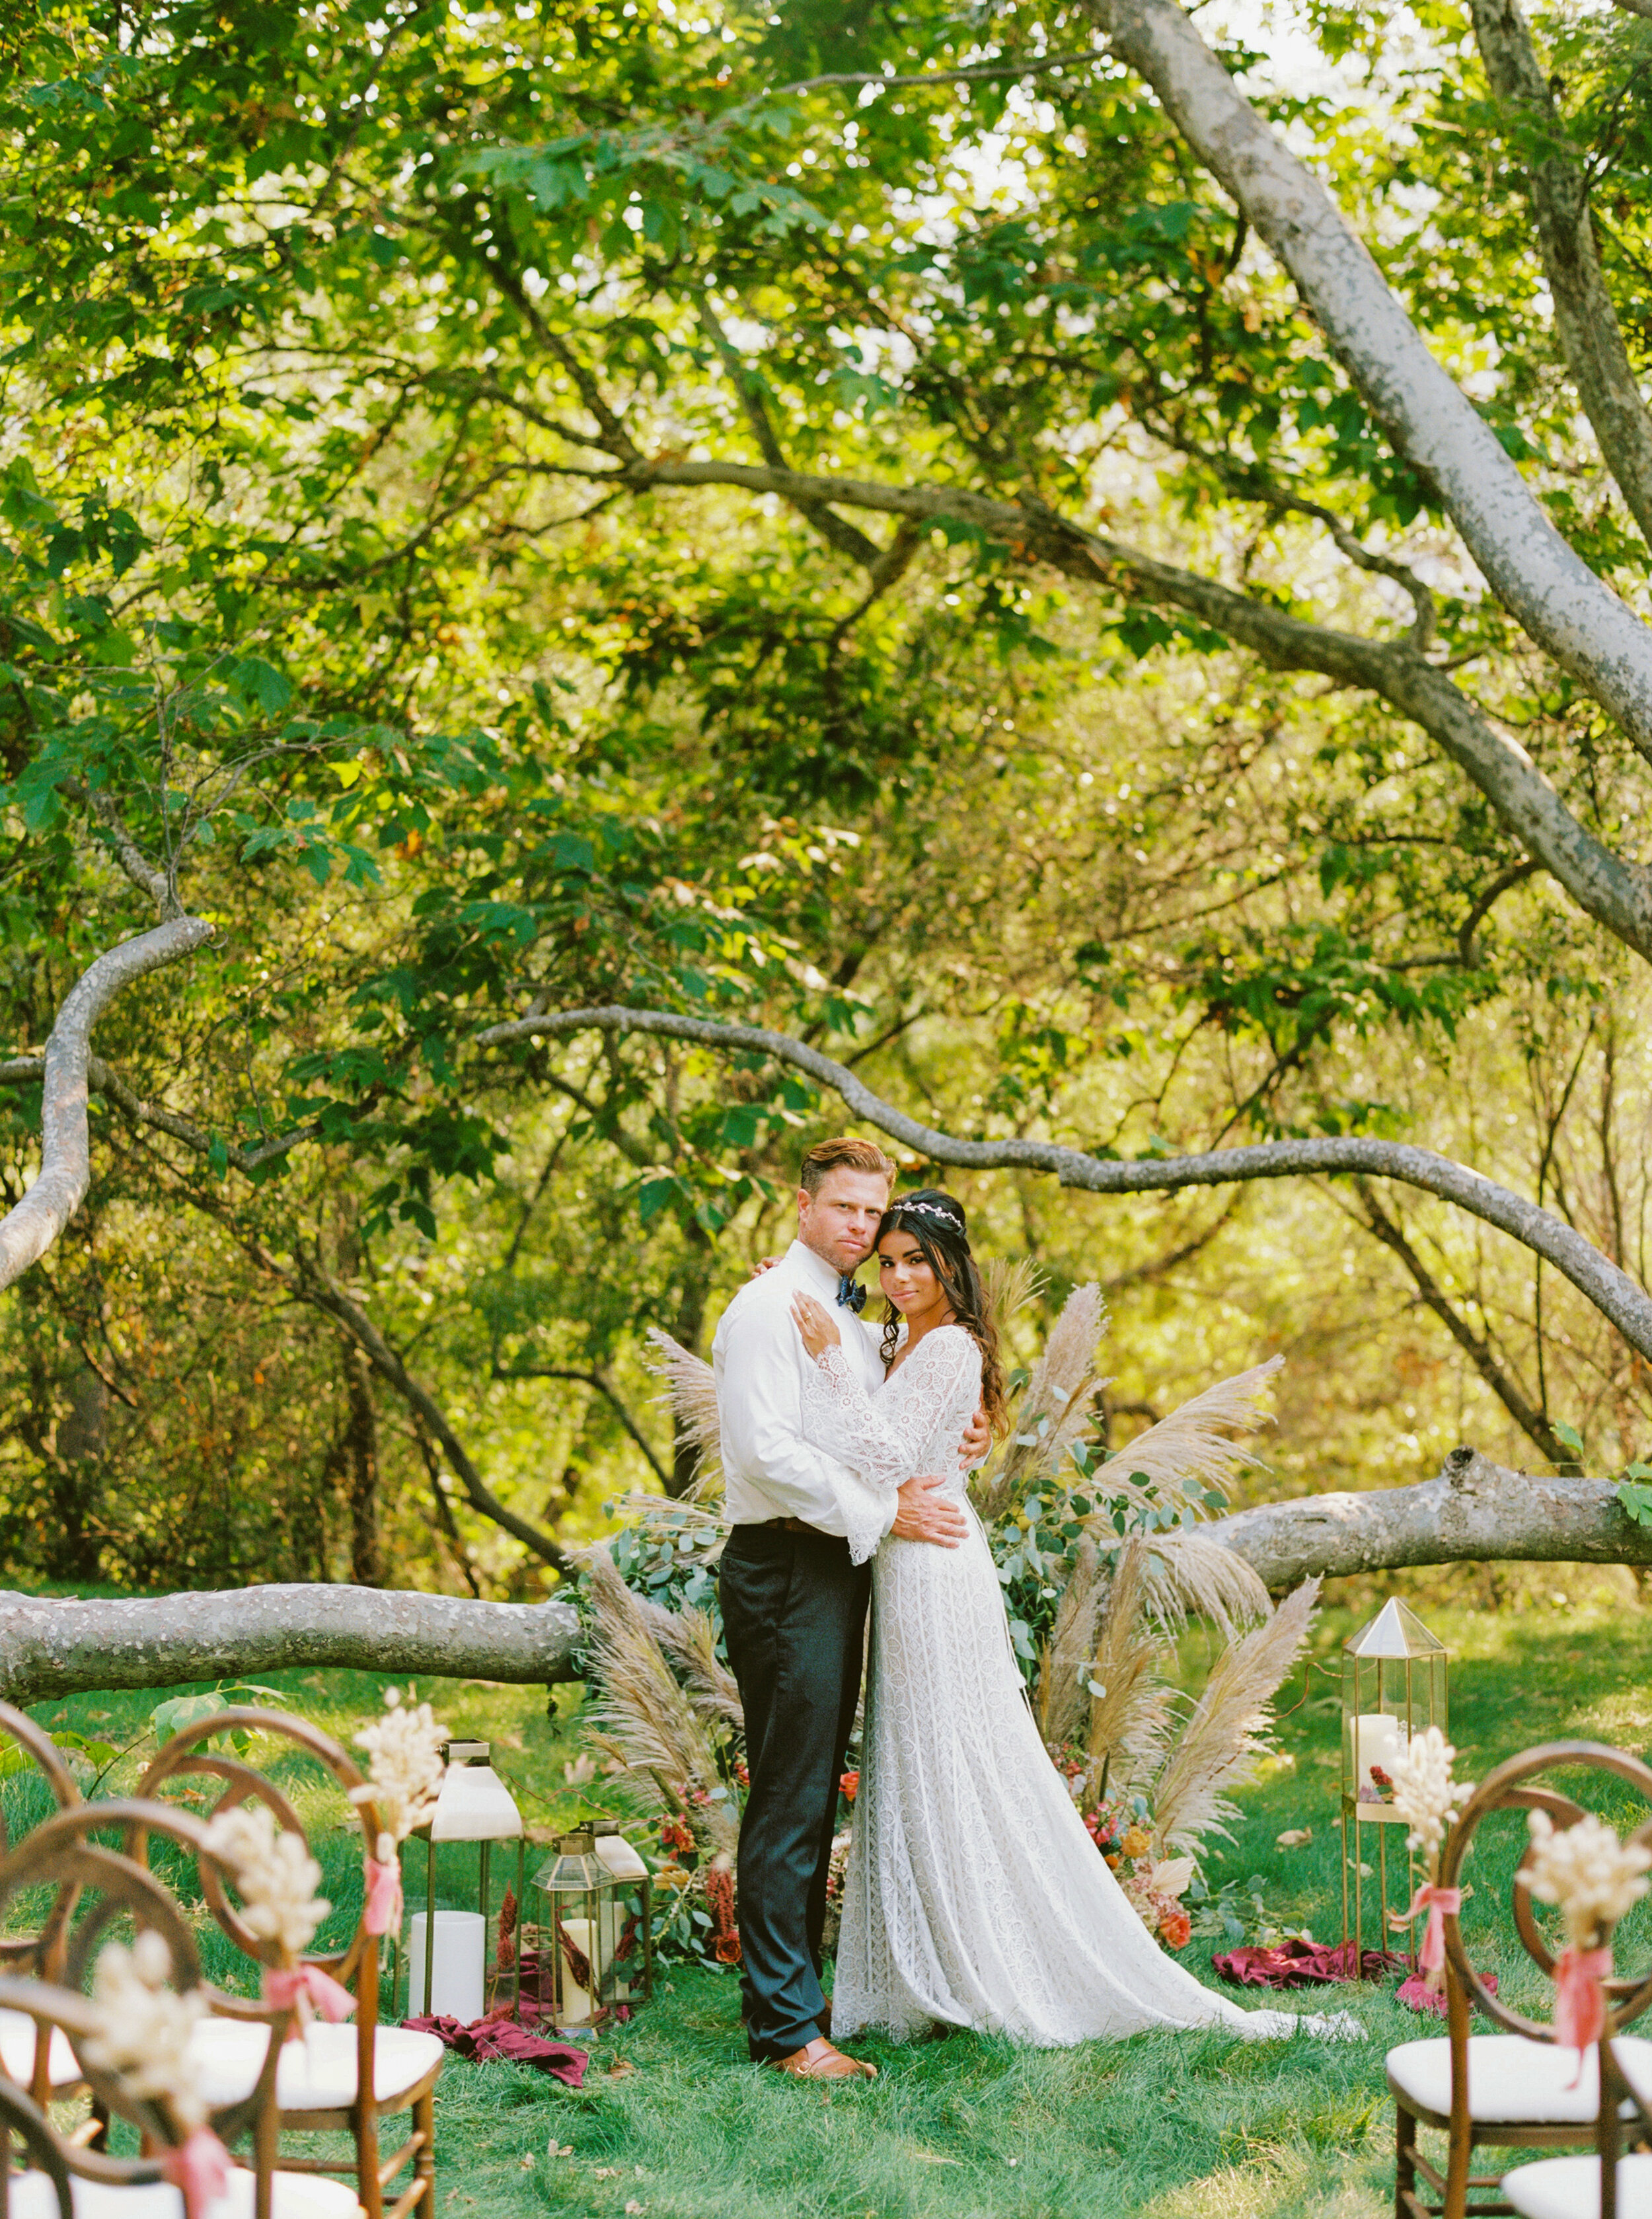 Sarahi Hadden - An Earthy Summer Boho Inspired Wedding with Sunset Hues at Gardener Ranch-109.jpg